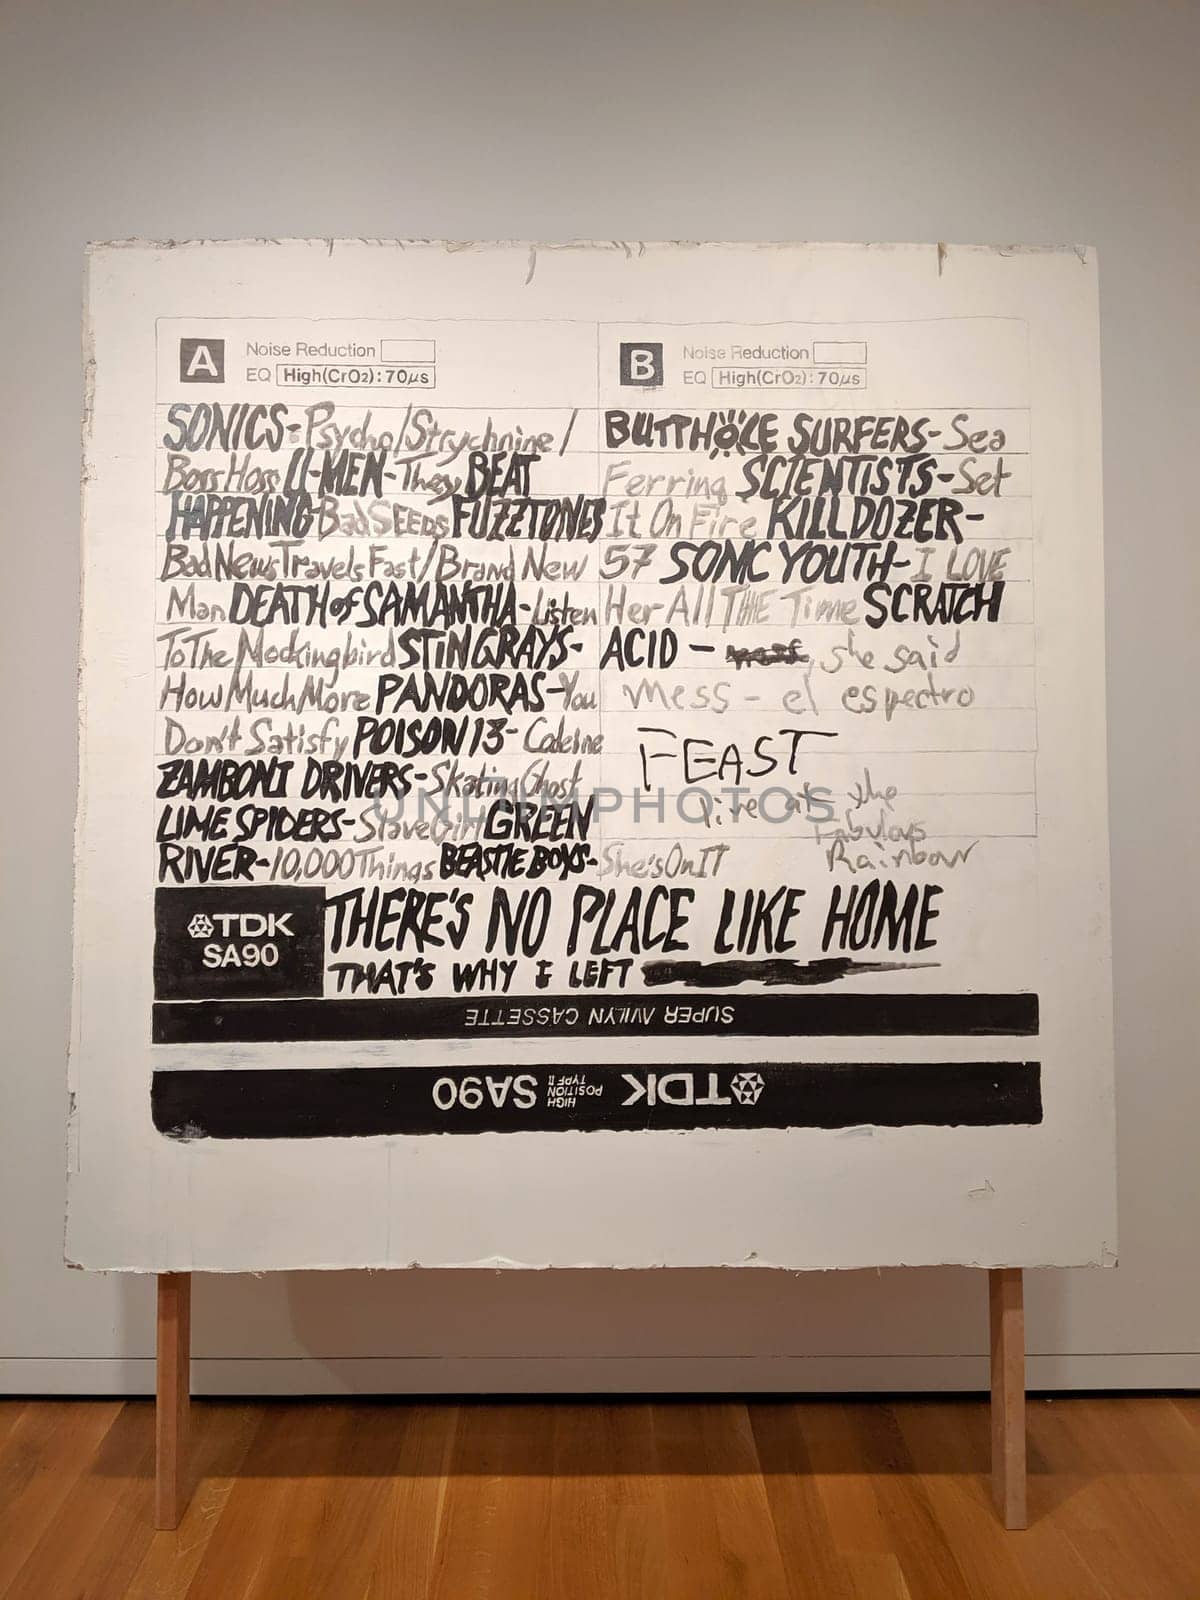 Mixtape Label Artwork at Seattle Art Museum by EricGBVD